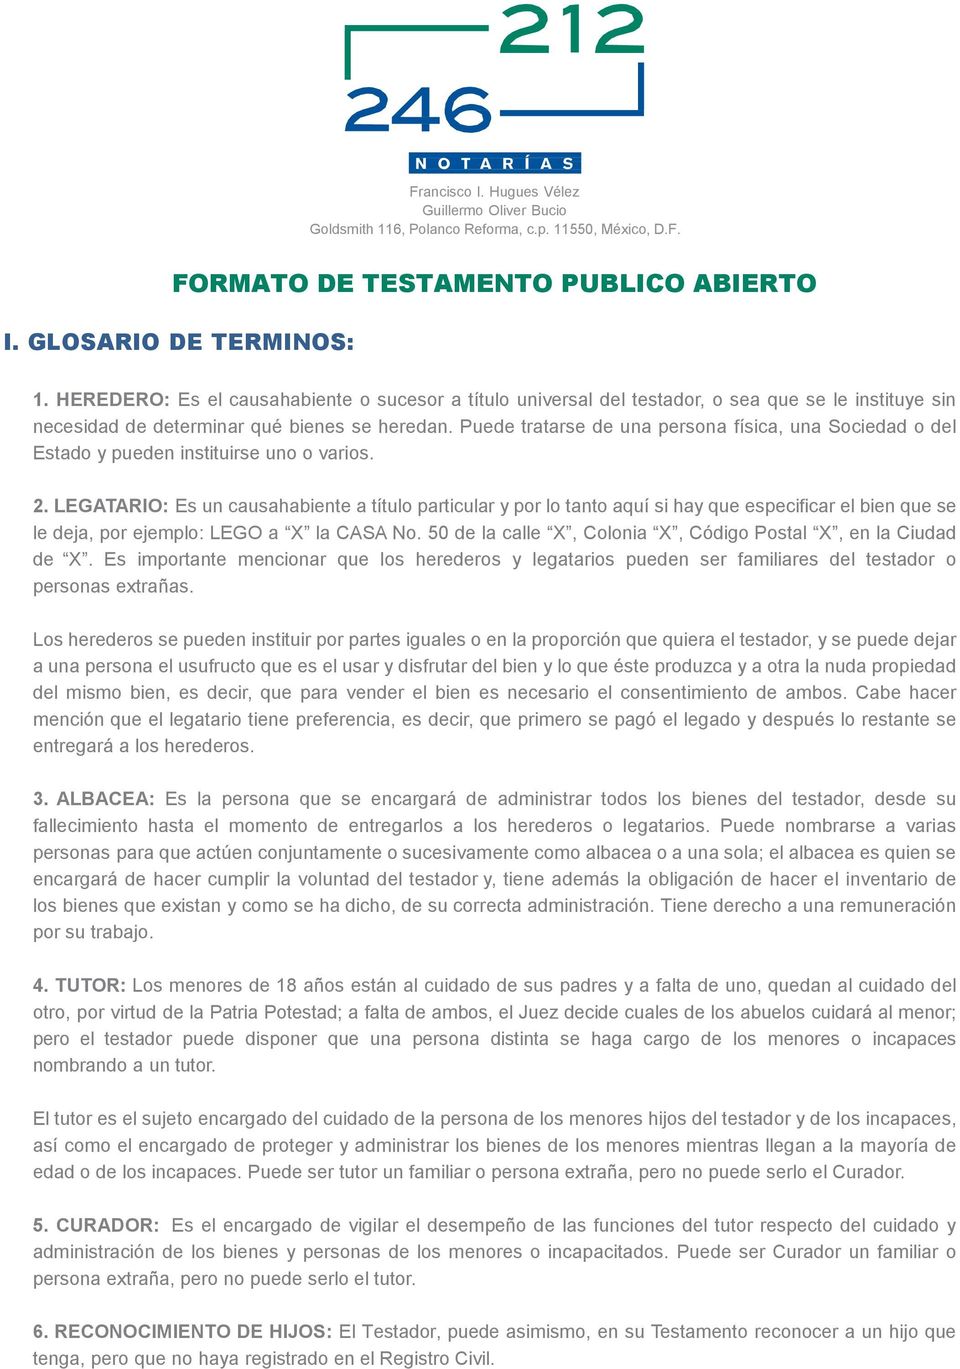 FORMATO DE TESTAMENTO PUBLICO ABIERTO - PDF Free Download